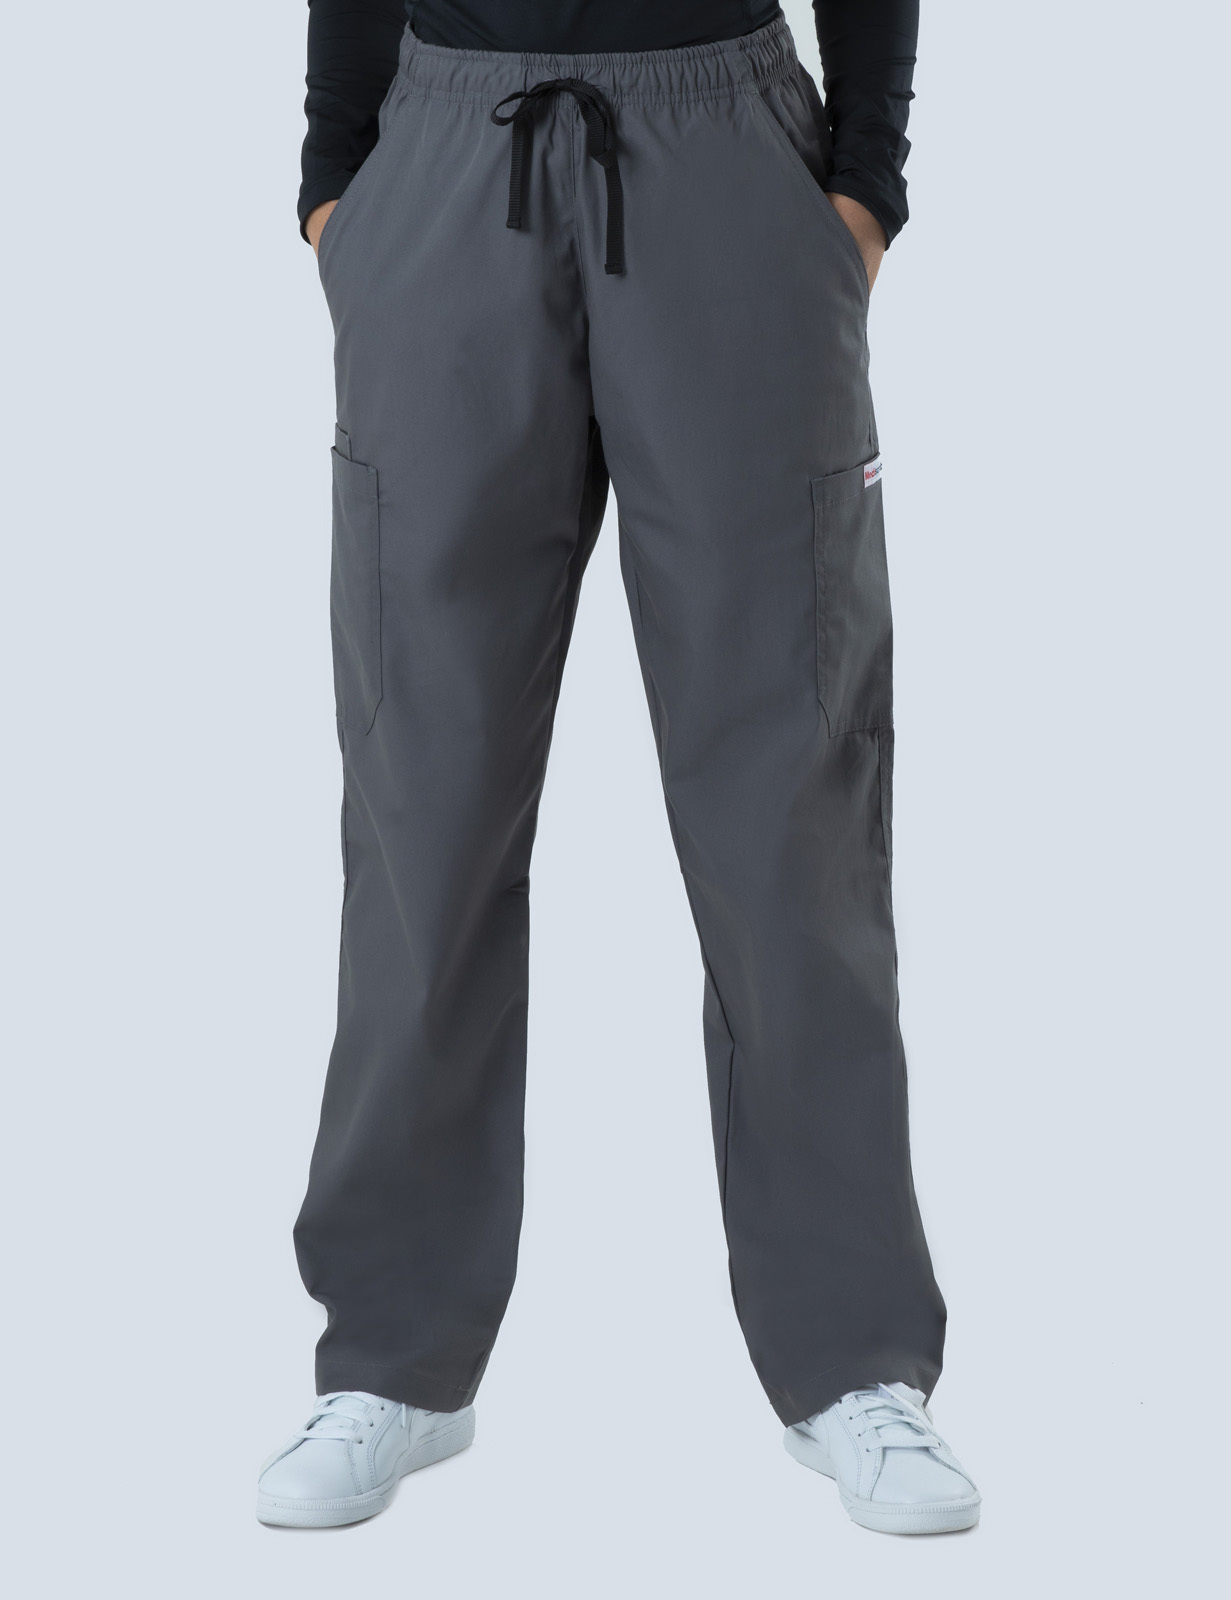 Women's Cargo Performance Pants - Steel Grey - X Small